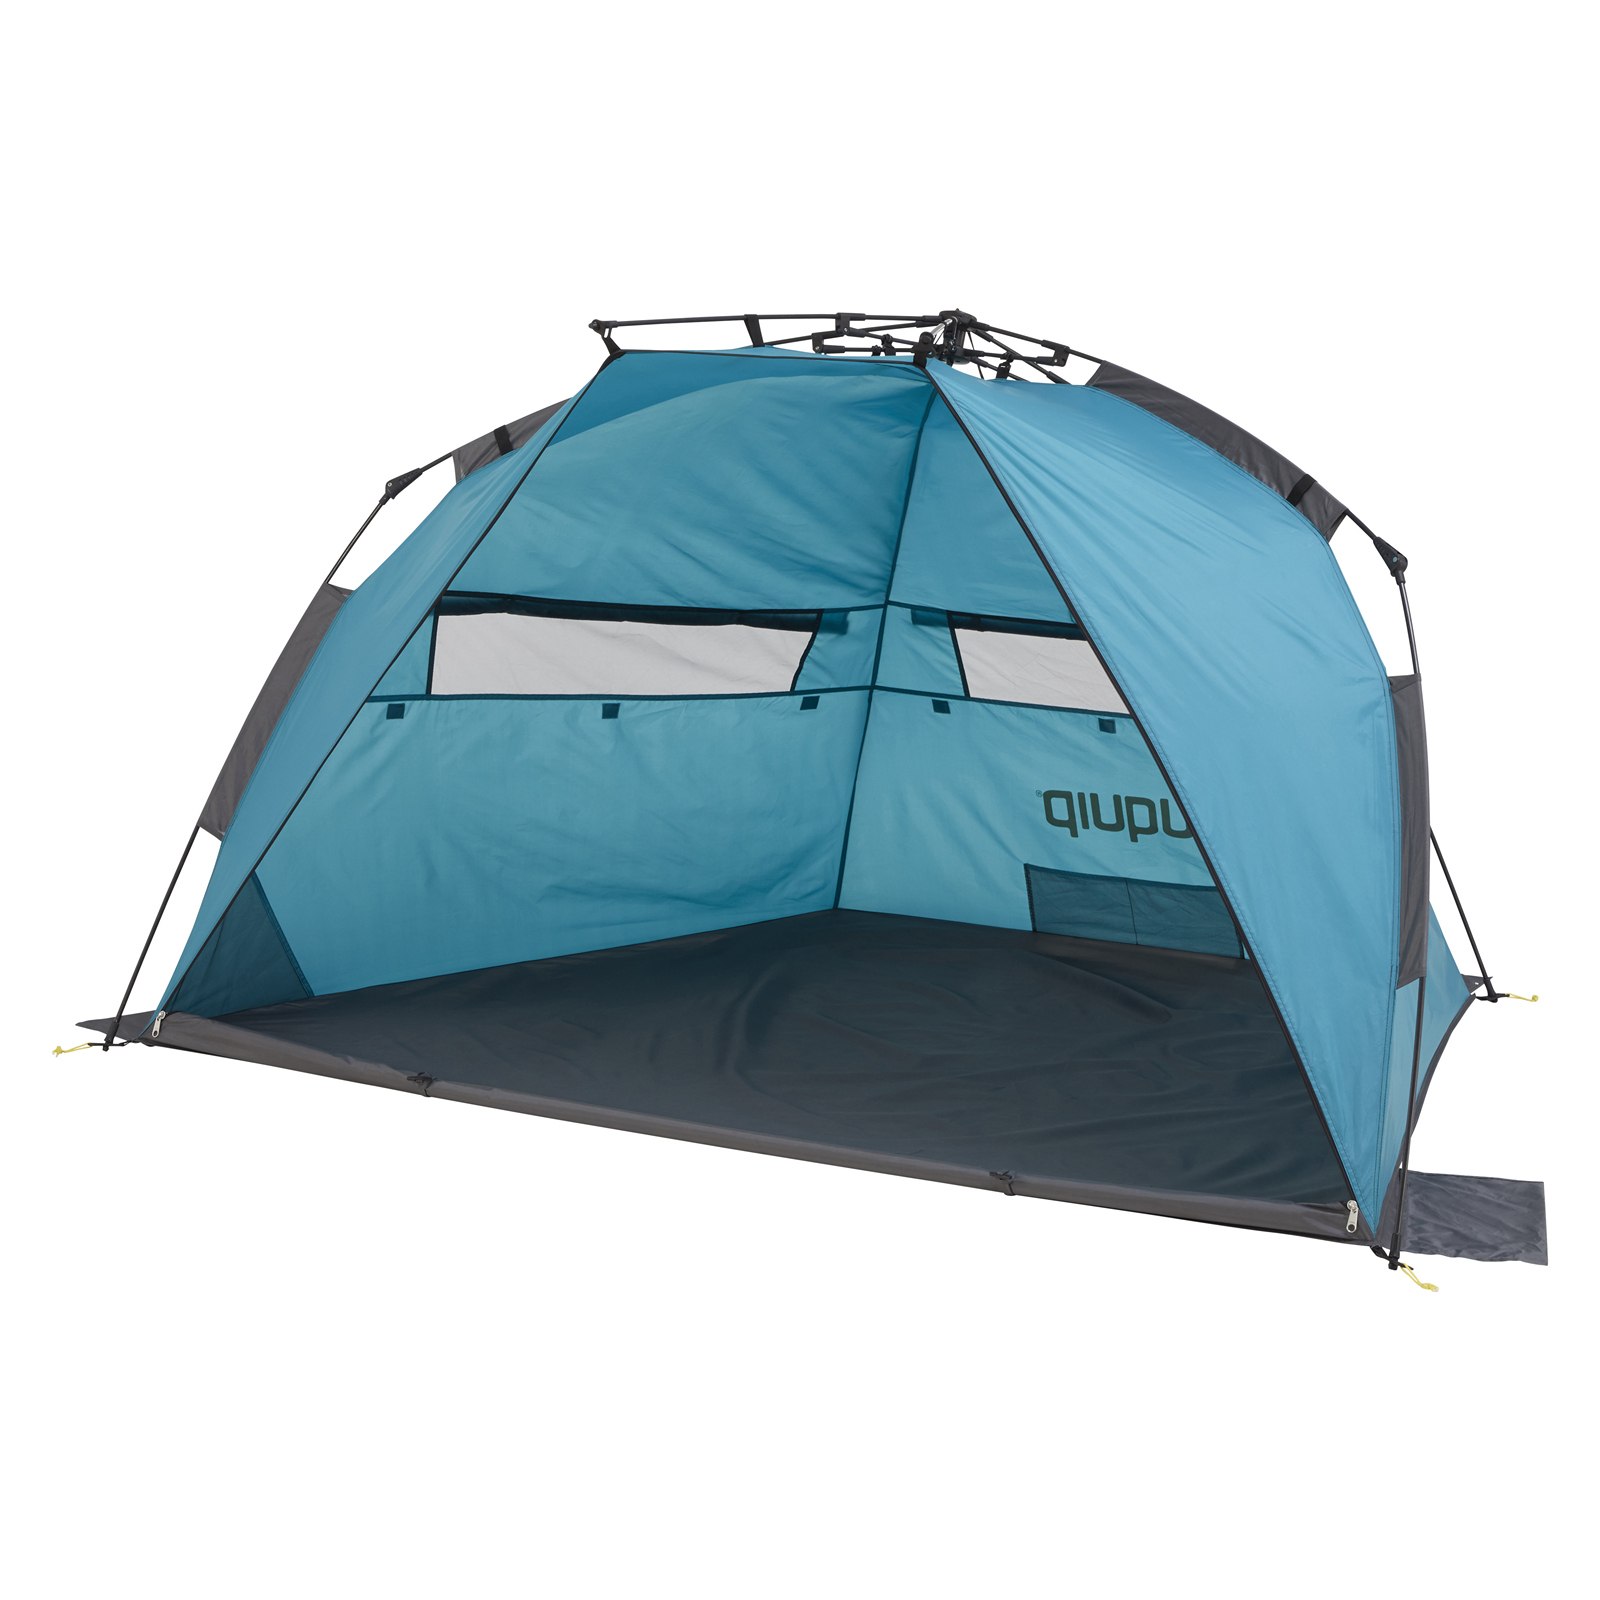 Productfoto van Uquip Speedy Beach Shelter - carribbean blue